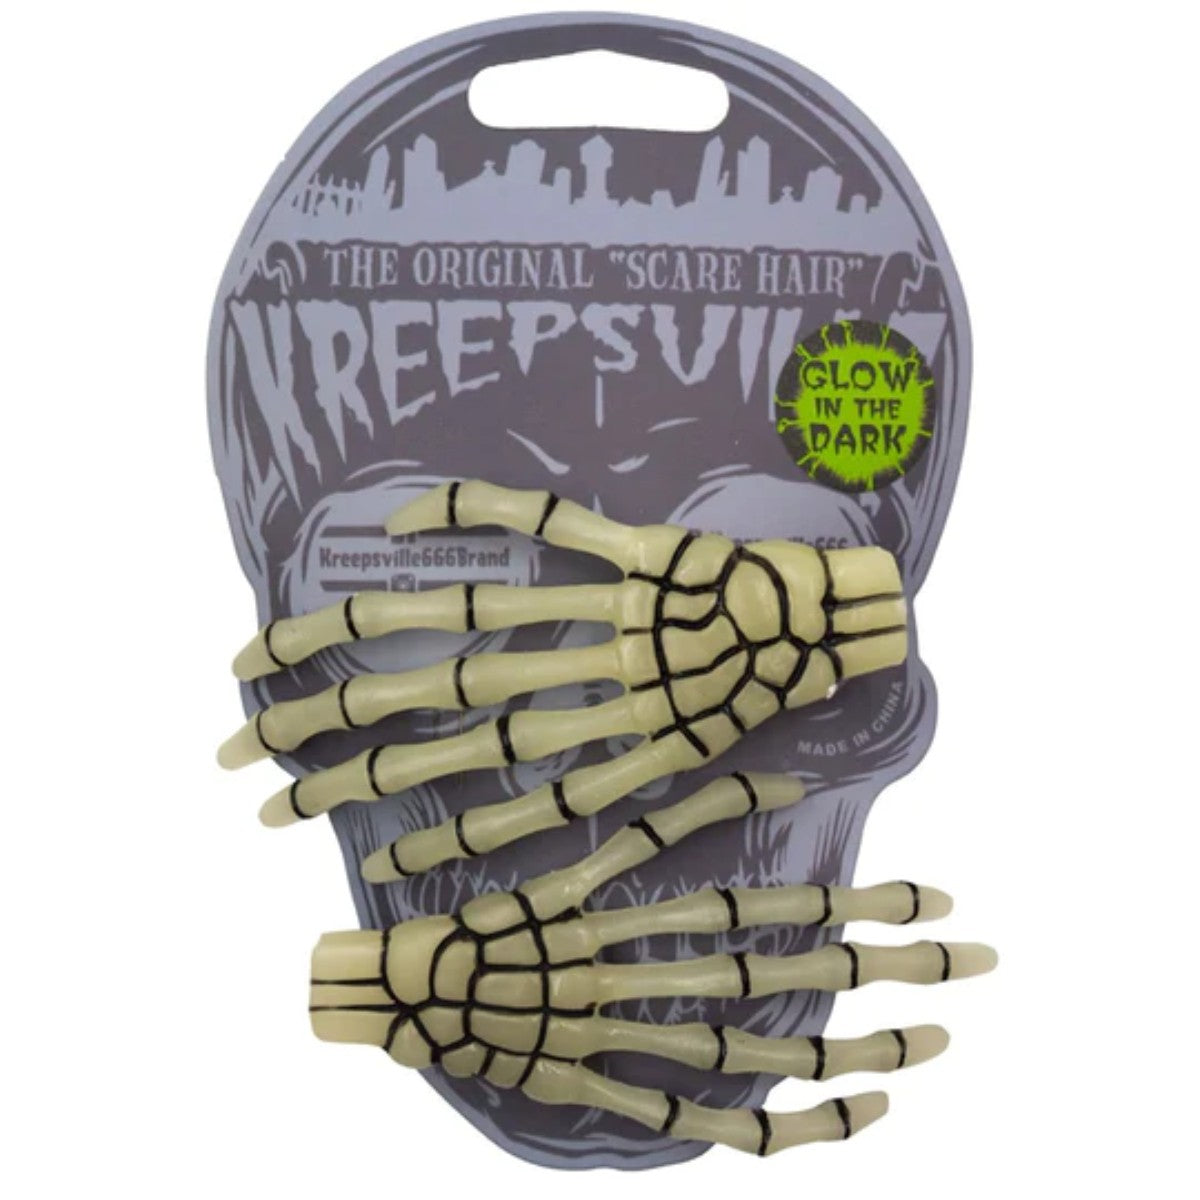 Kreepsville 666 Glow In the Dark Skeleton Hand Hair Slides